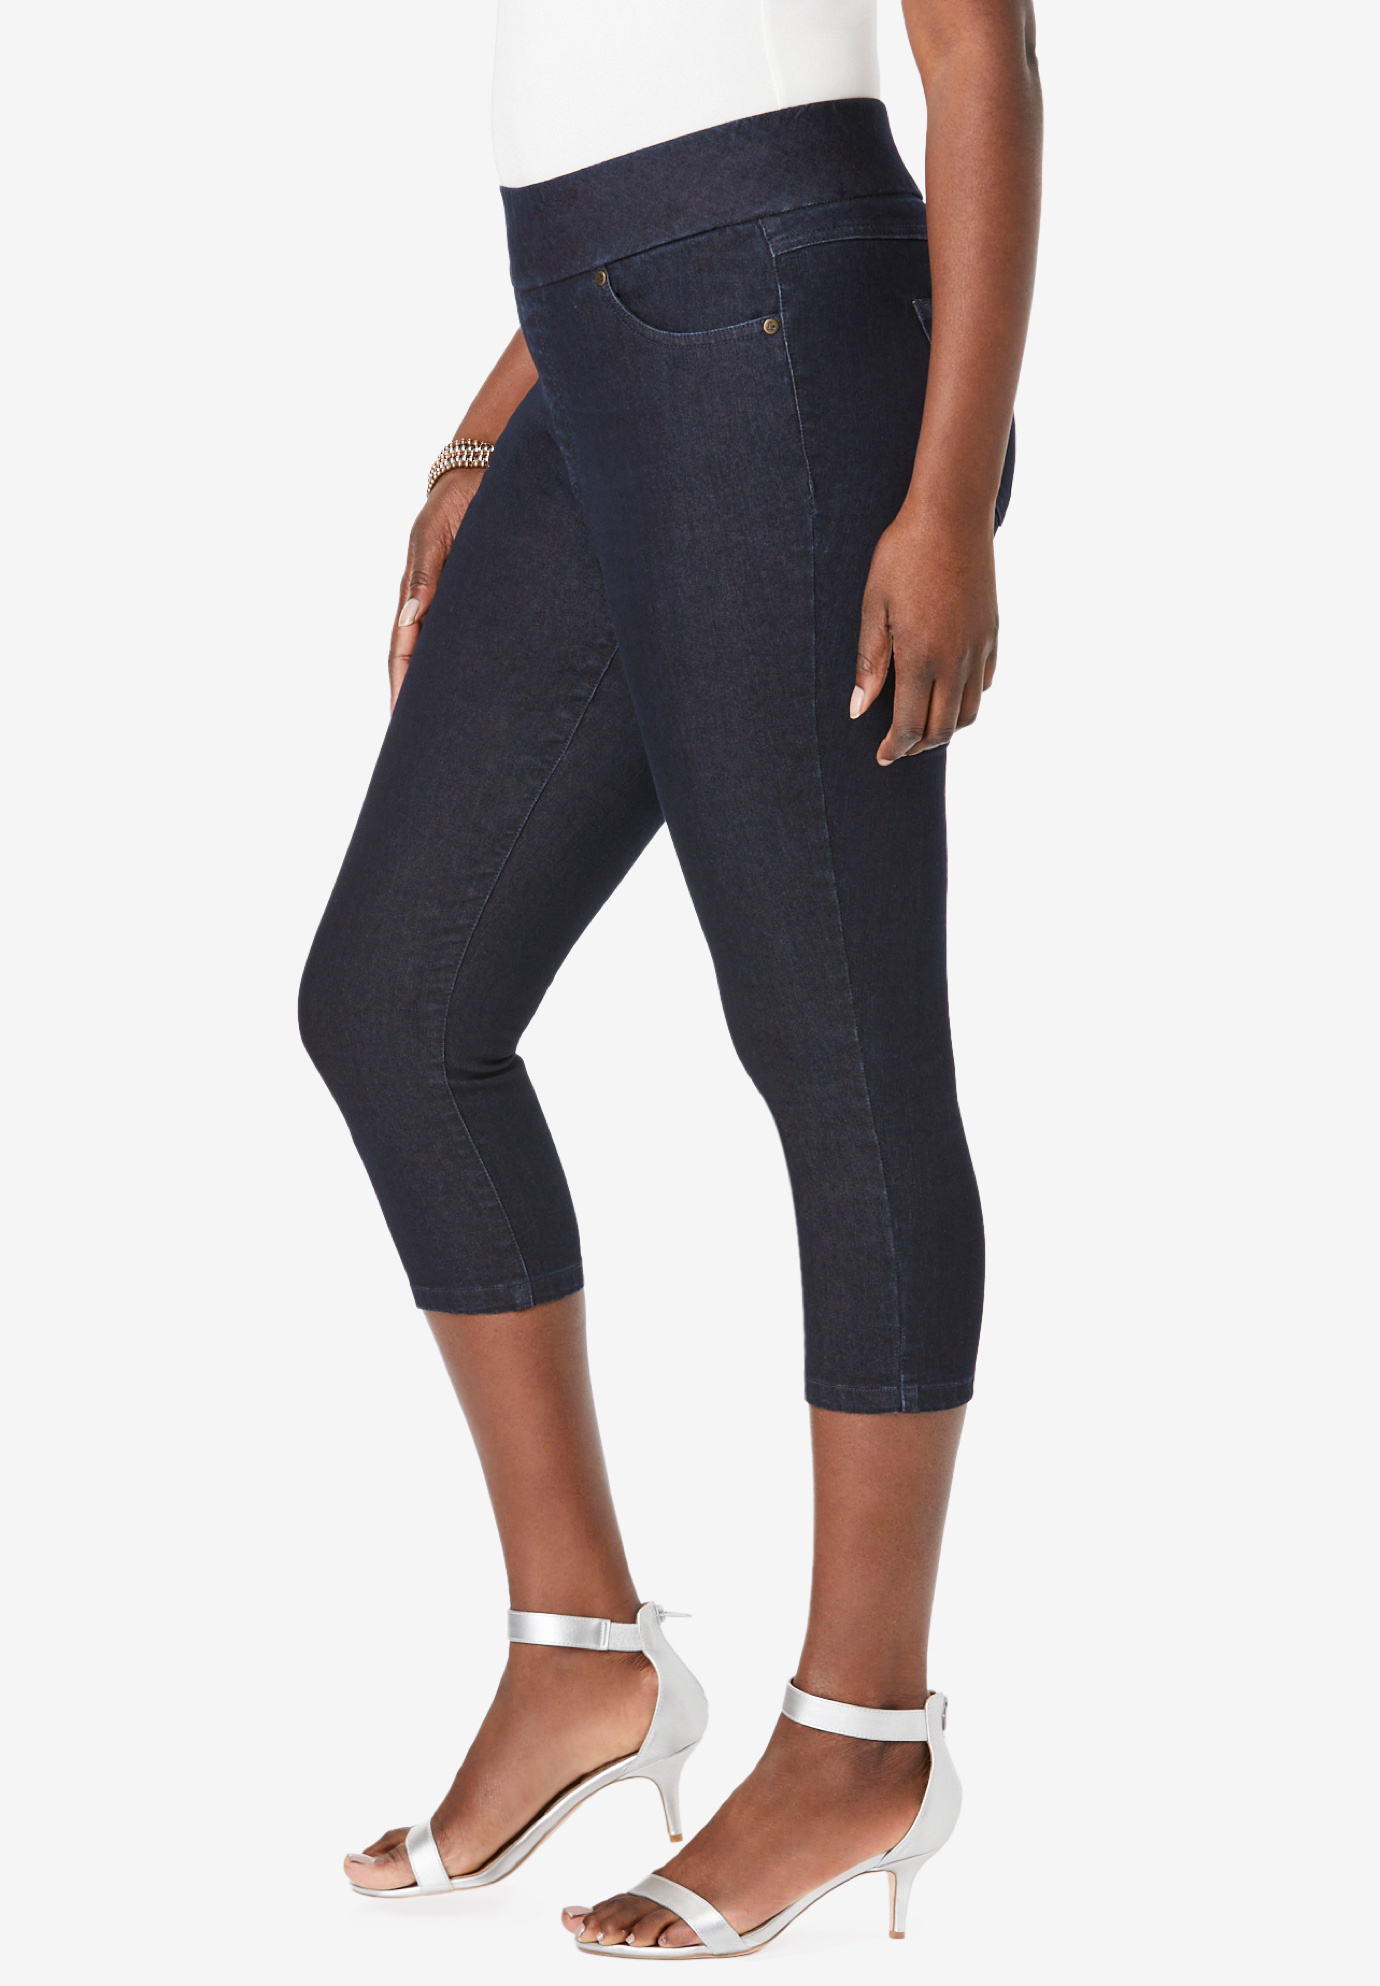 Jessica London Women's Plus Size Comfort Waist Stretch Denim Capris Pull On Jeans Stretch Denim Jeggings - image 4 of 6